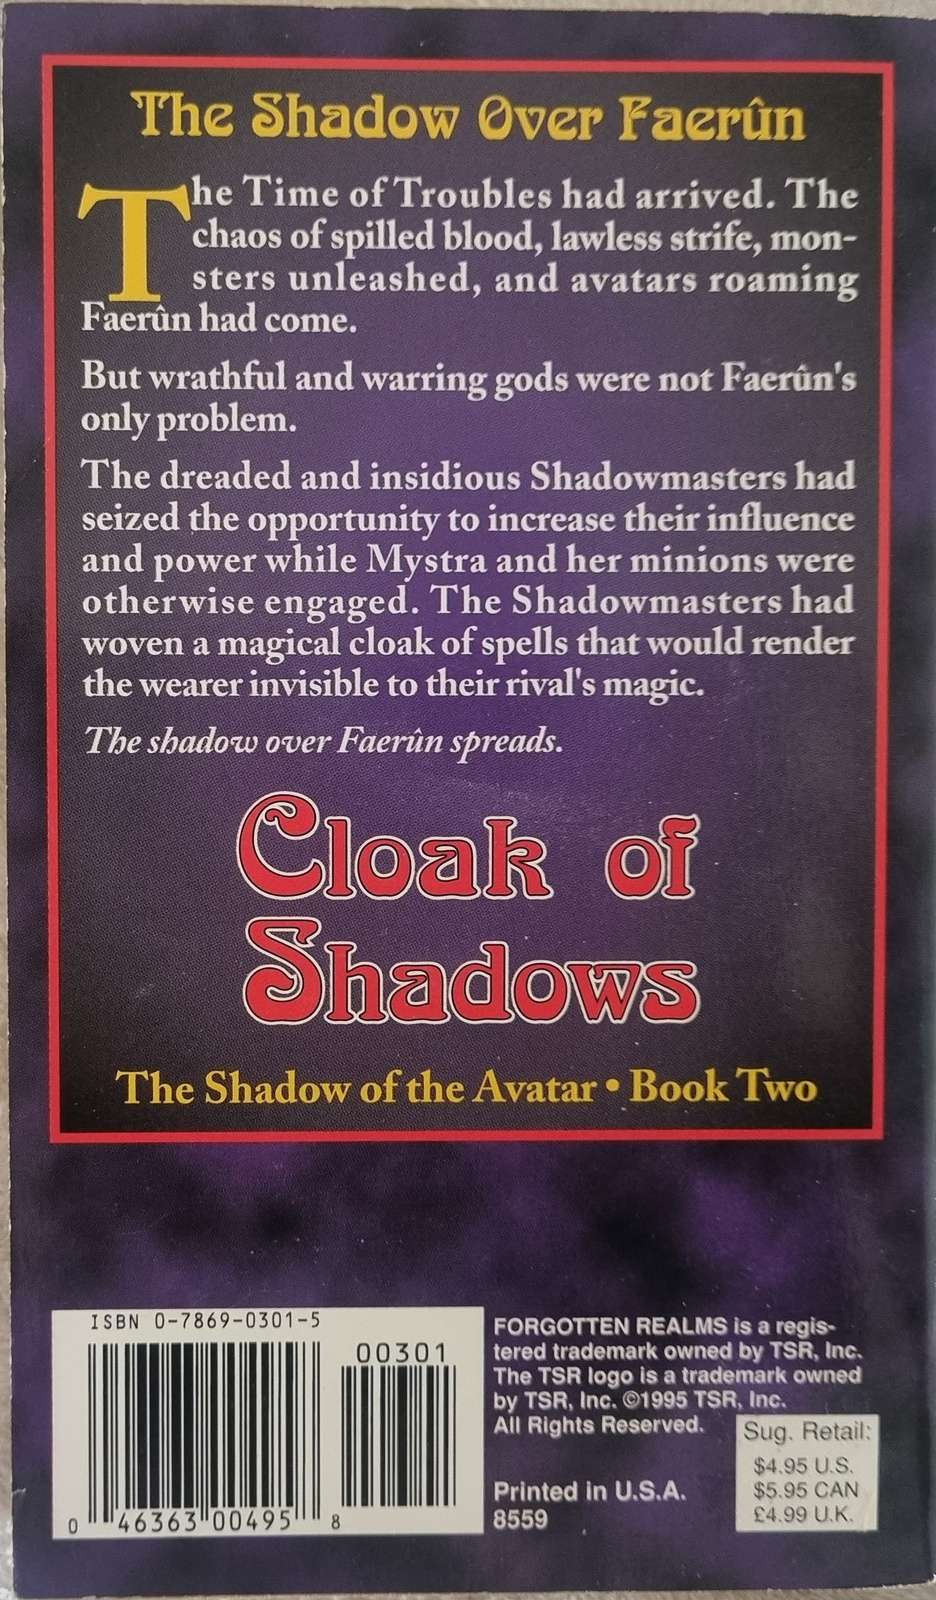 Forgotten Realms: Cloak of Shadows - Ed Greenwood